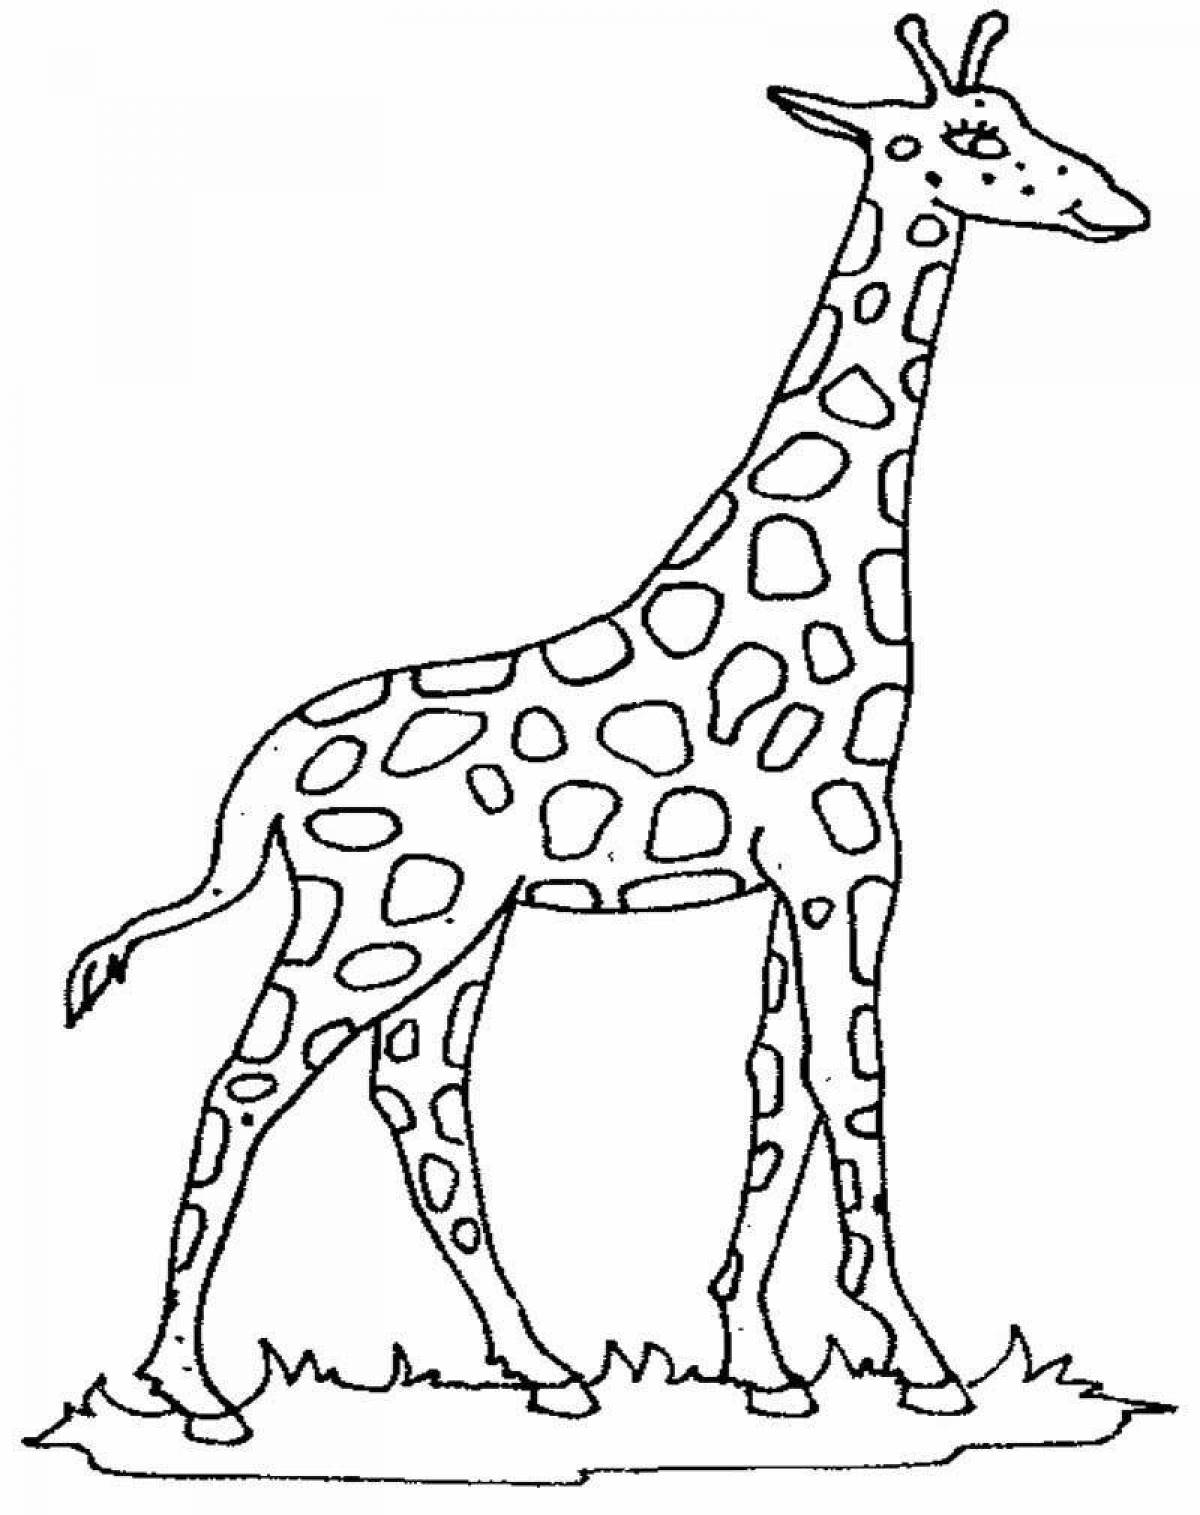 Majestic giraffe coloring page